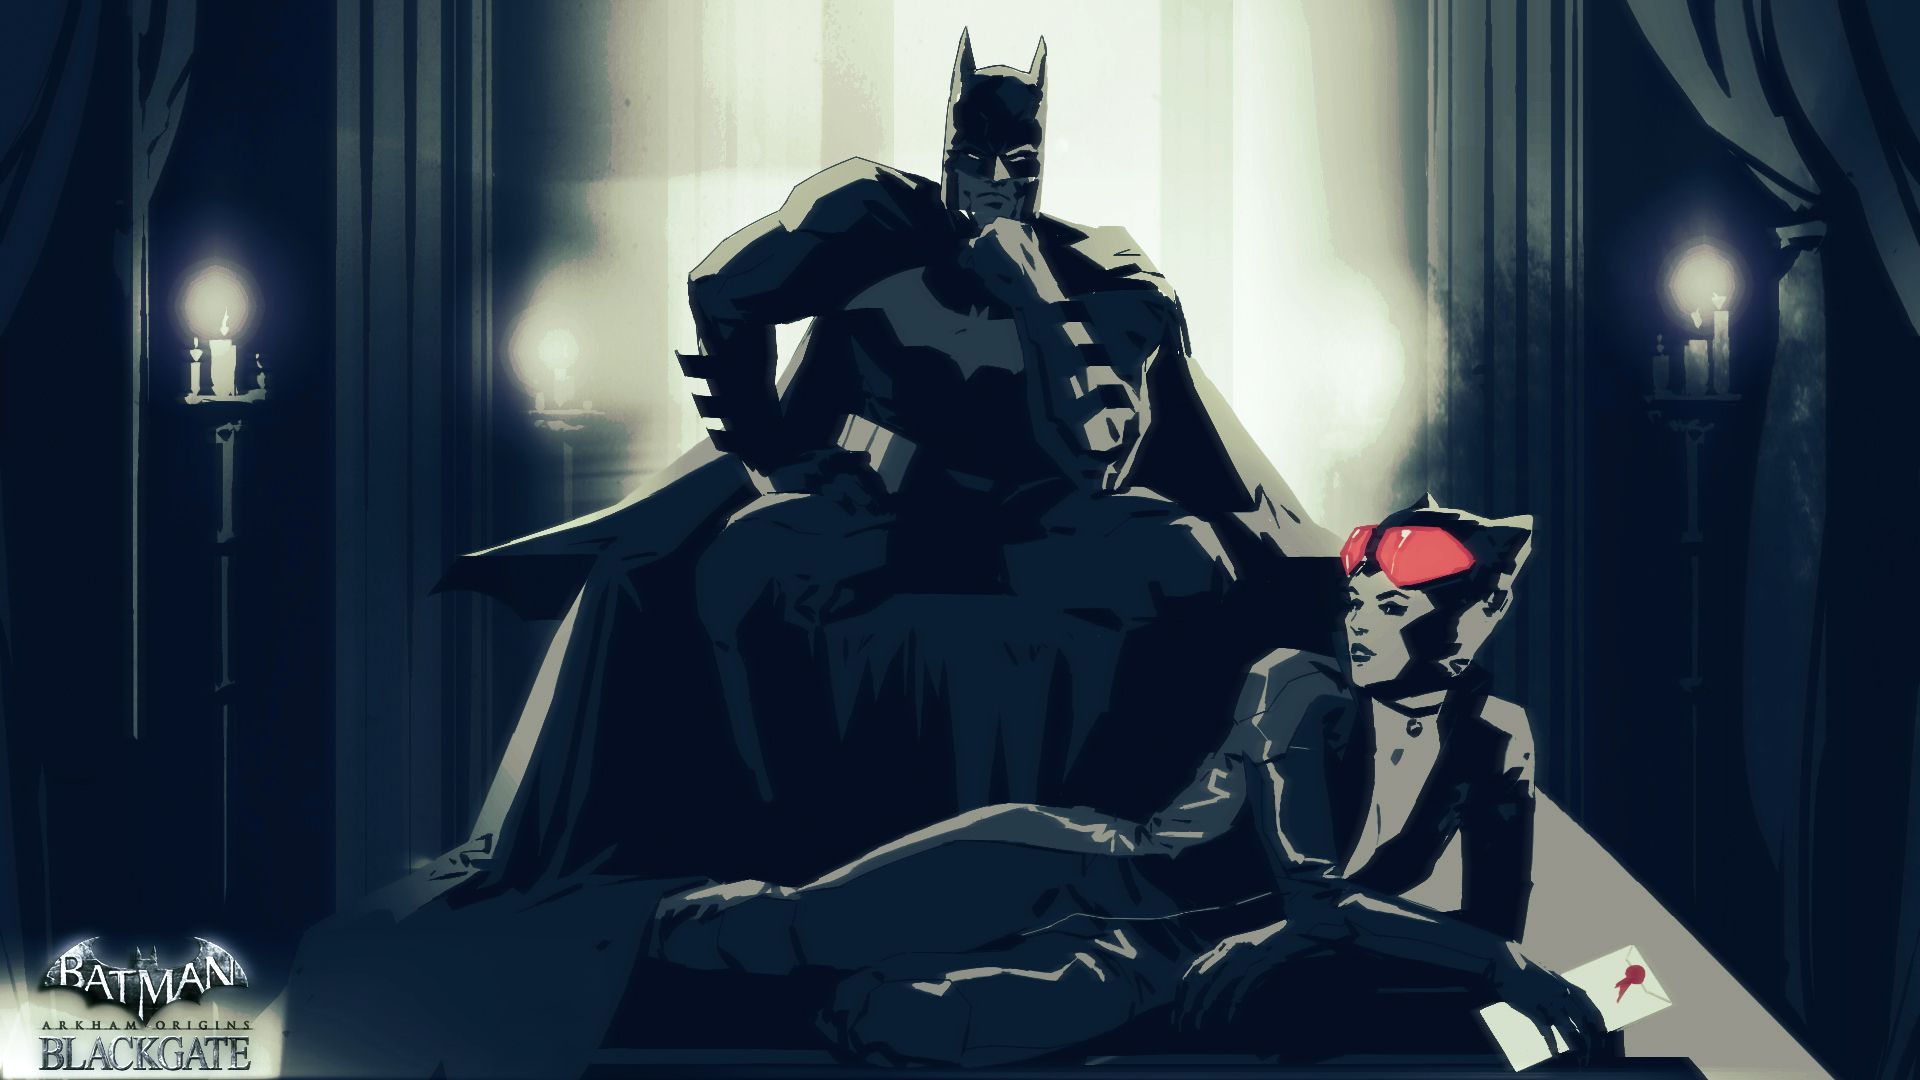 Batman: Arkham Origins Blackgate - Deluxe Edition Trailer Revealed